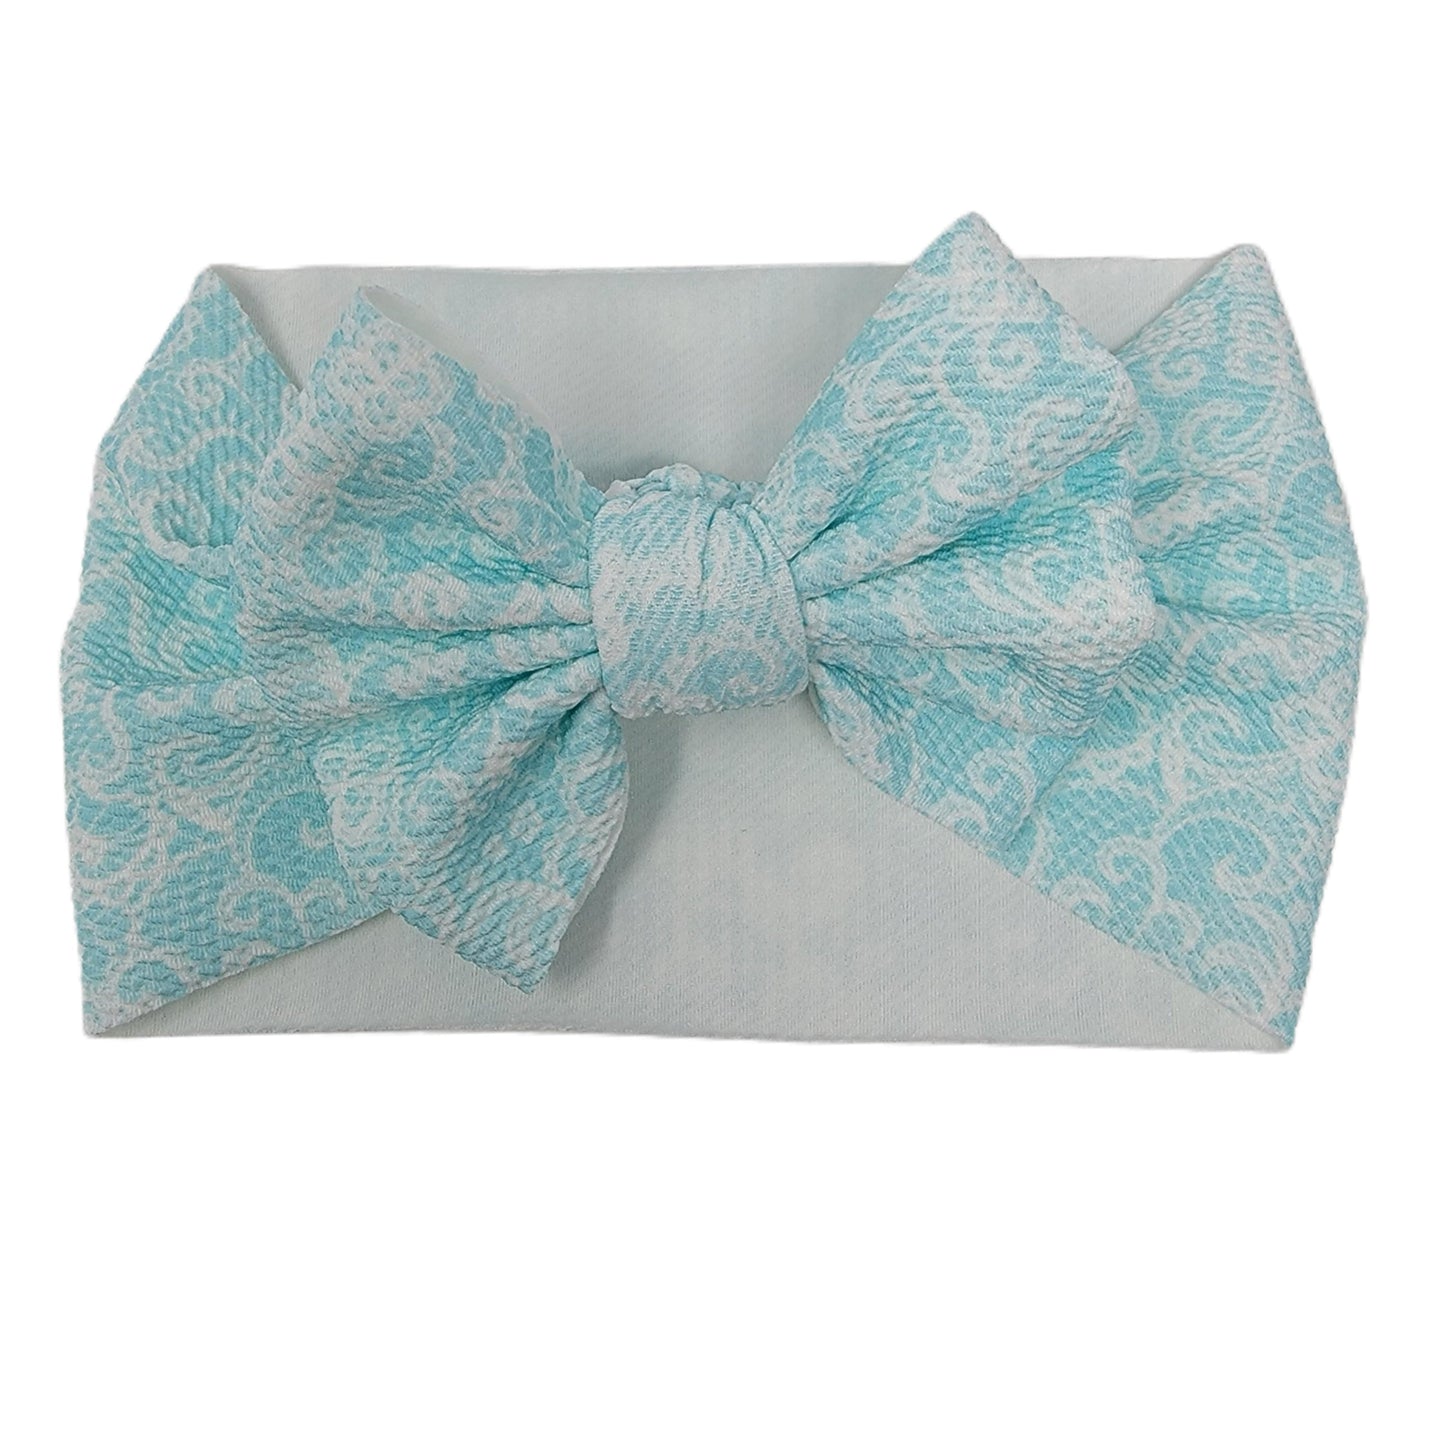 5" Seafoam Lace Fabric Bow Headwrap